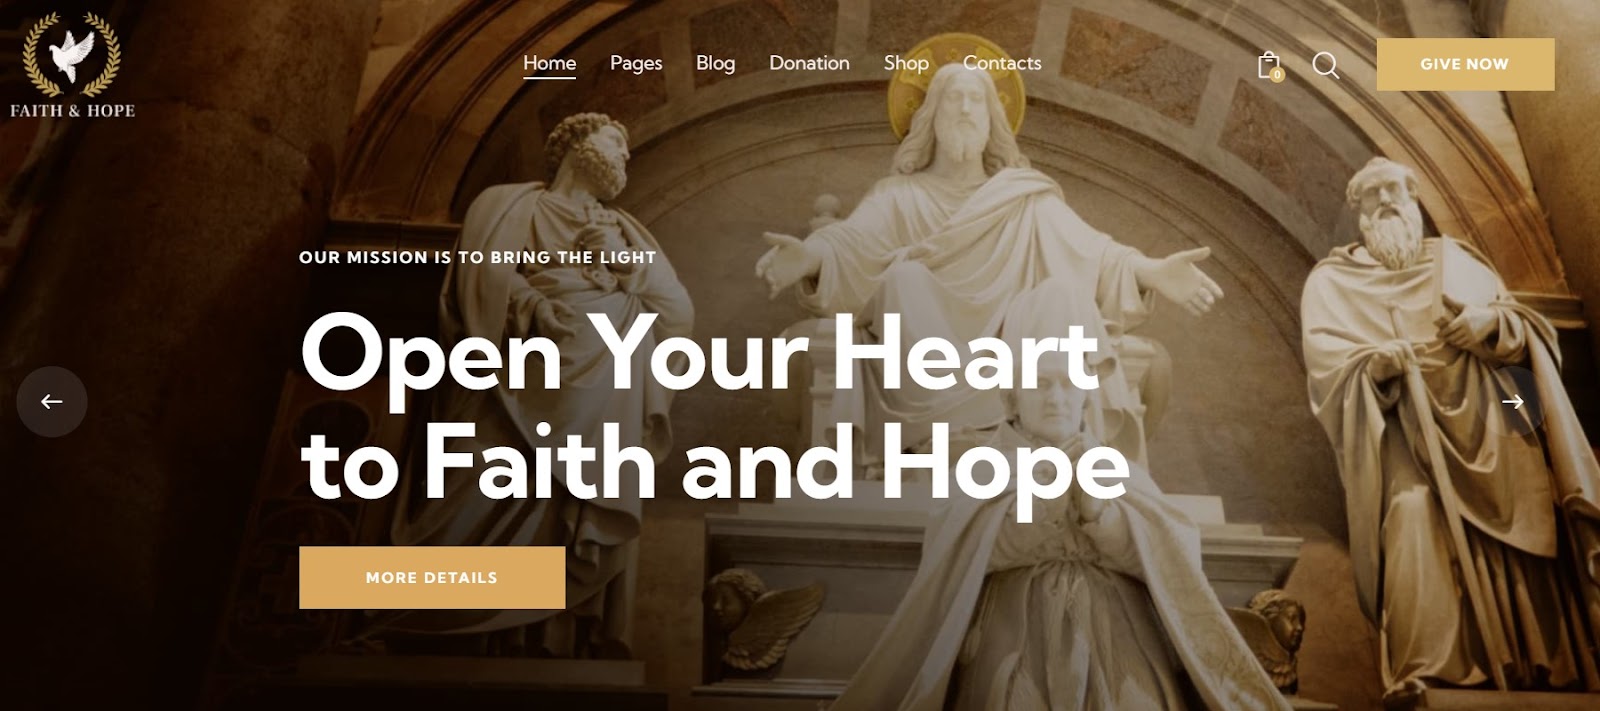 Faith & Hope WordPress church theme